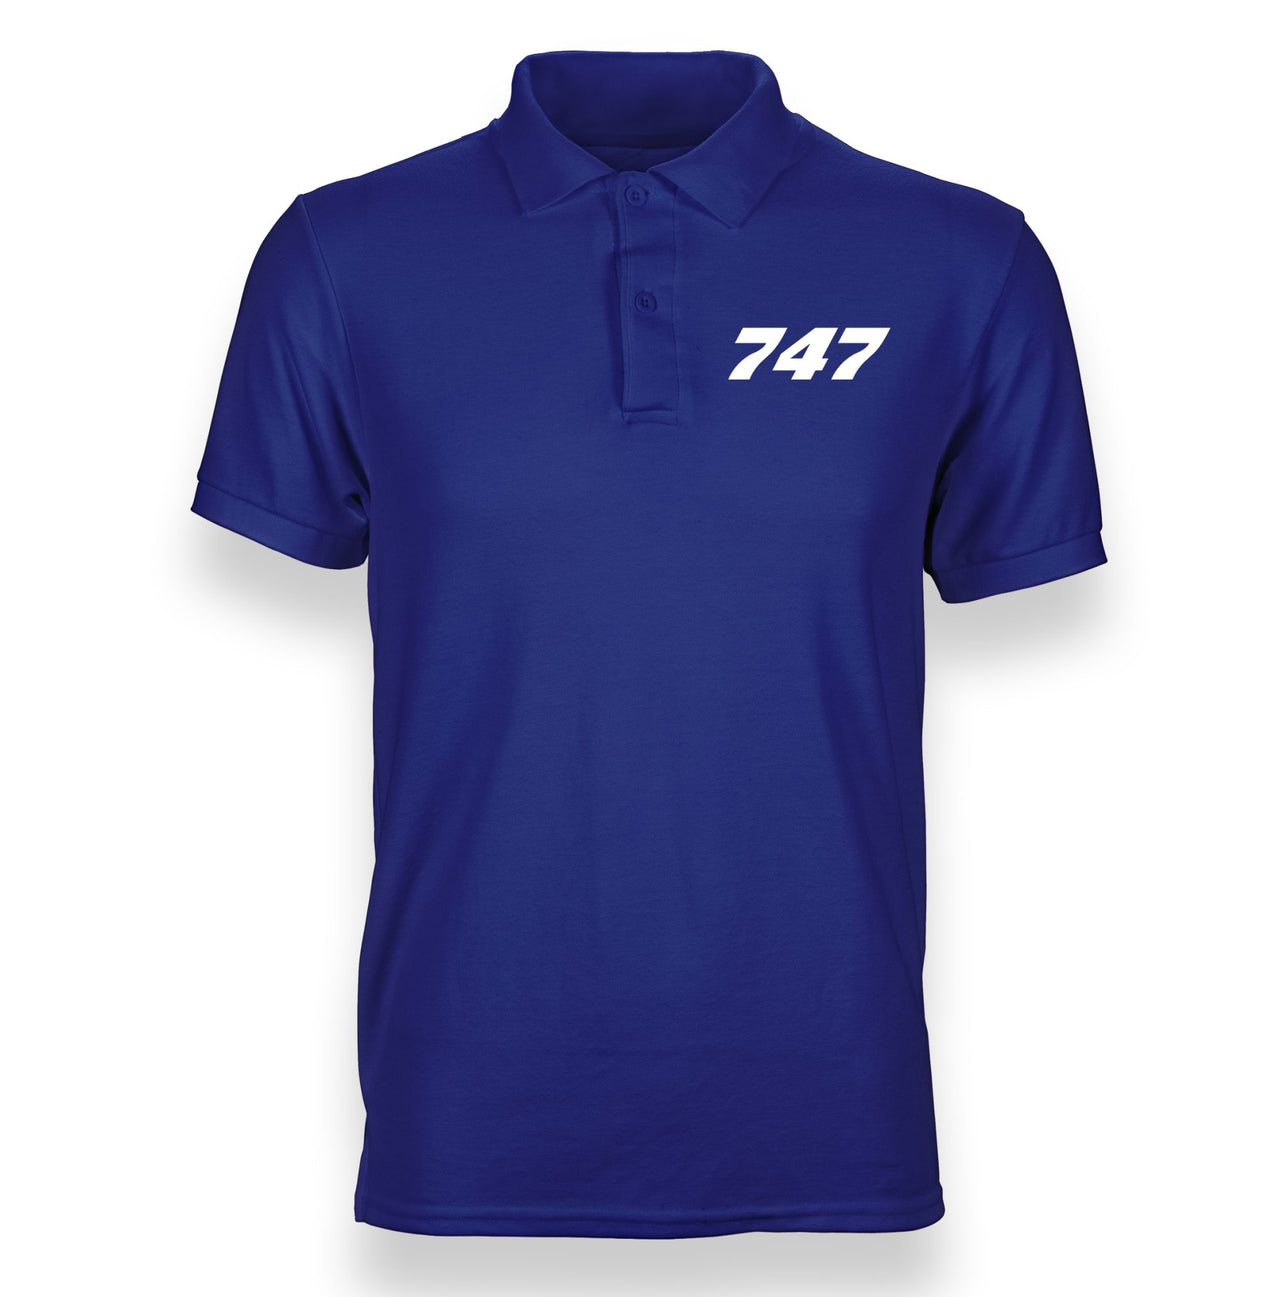 747 Flat Text Designed "WOMEN" Polo T-Shirts